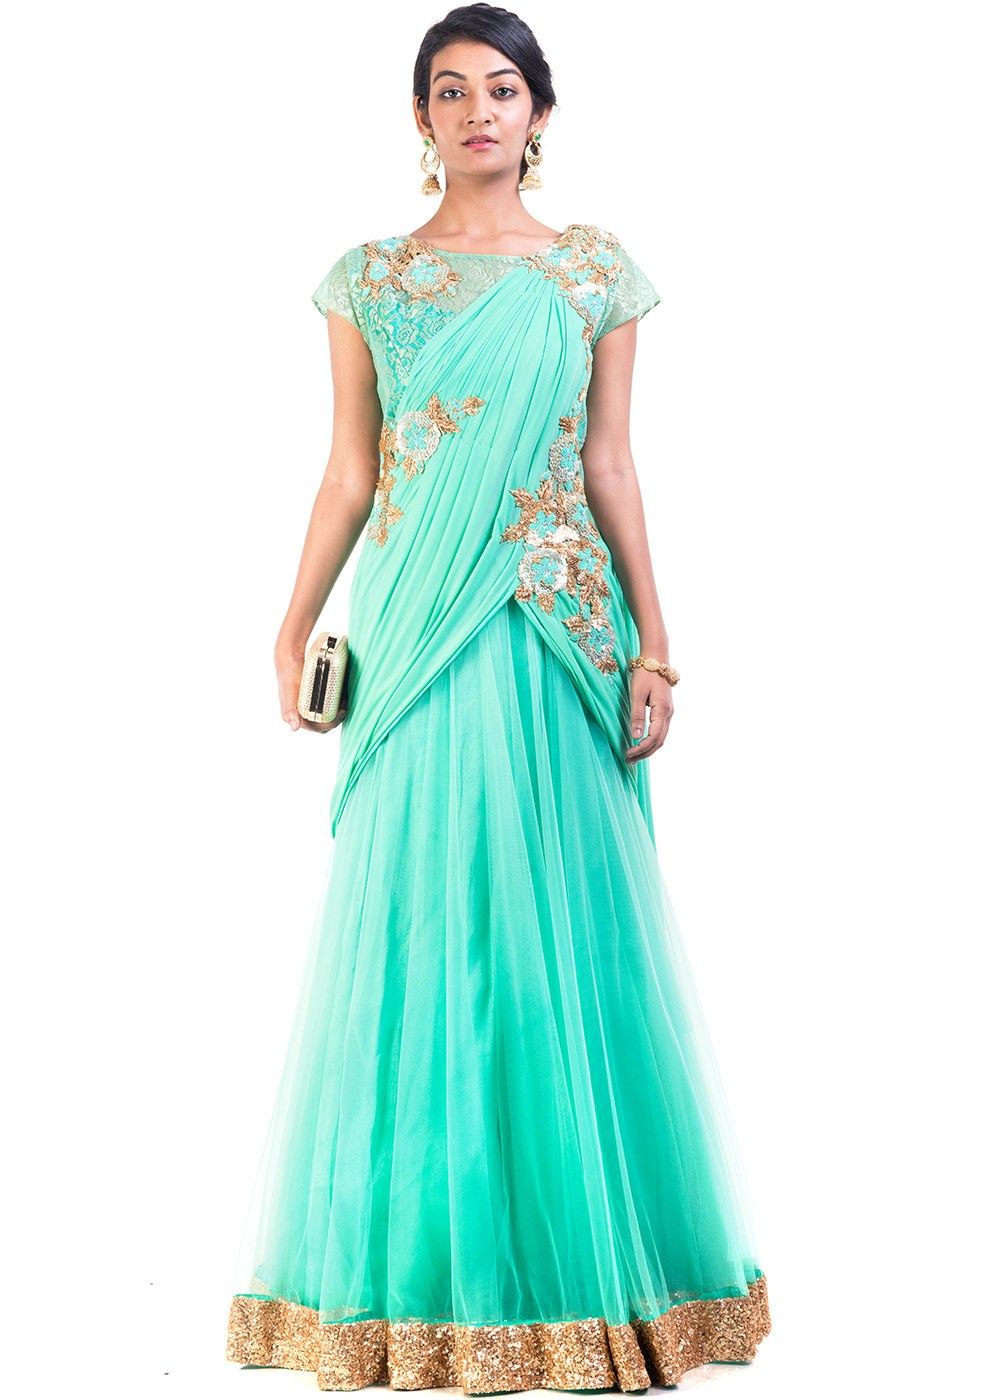 Saree Gown - Buy Saree Gown online at Best Prices in India | Flipkart.com